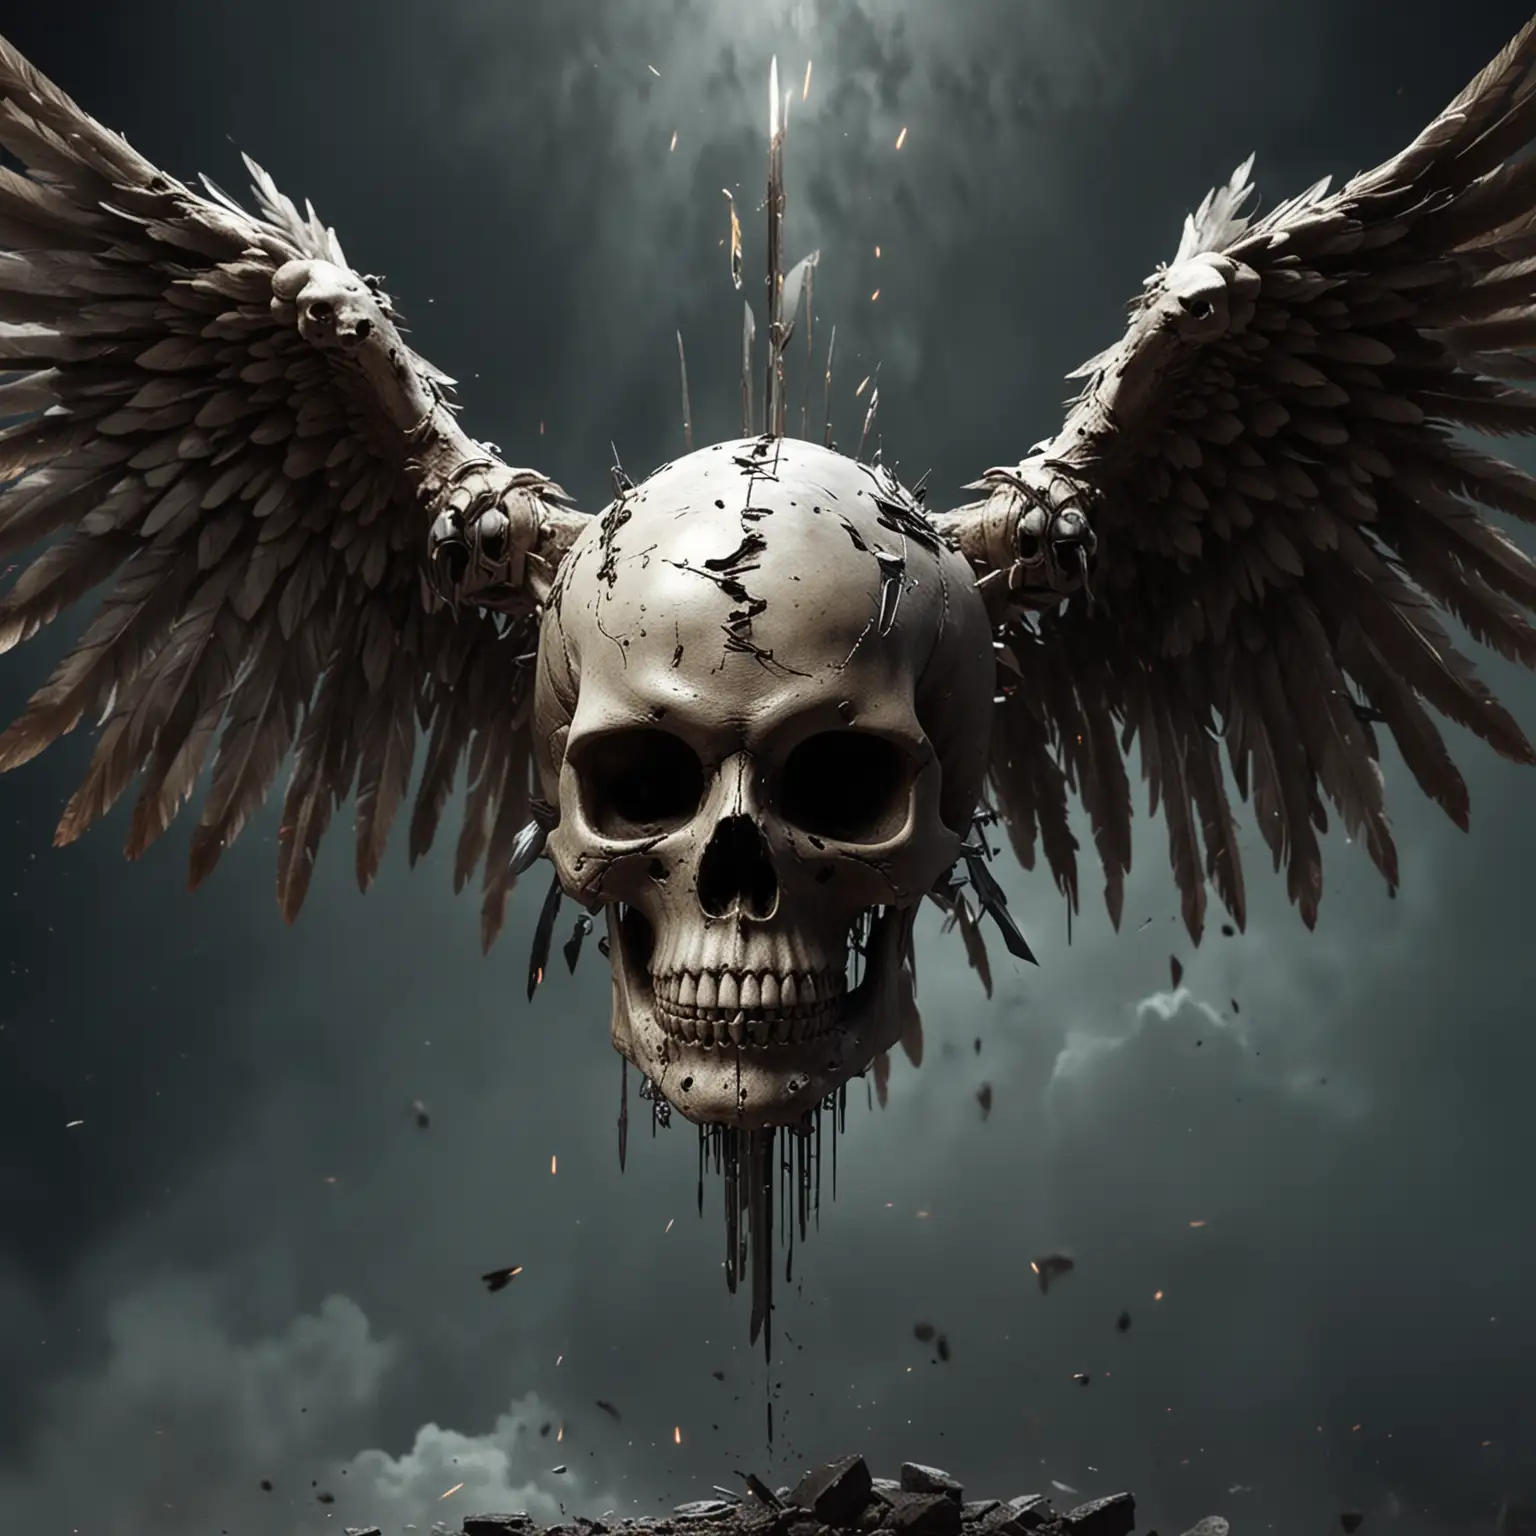 Skull with Weapon Wings Dark Fantasy Artwork in 4K Resolution